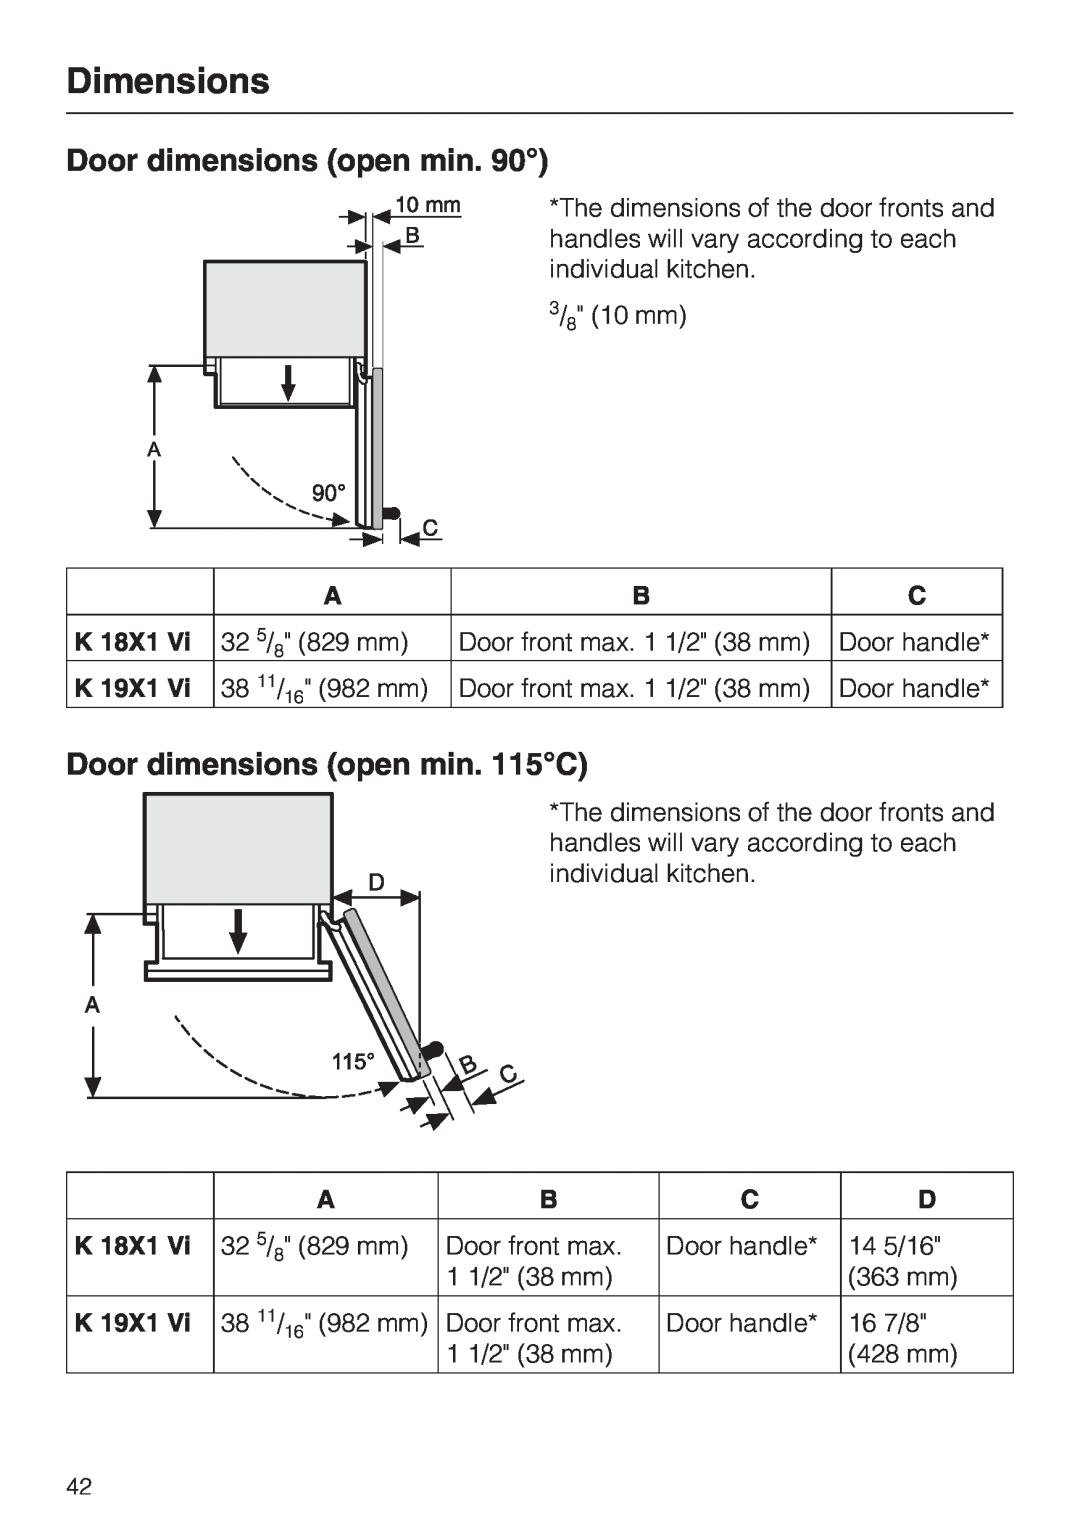 Miele K 1801 Vi, K 1911 Vi, K 1901 Vi, K 1811 Vi installation instructions Dimensions, Door dimensions open min. 115C 